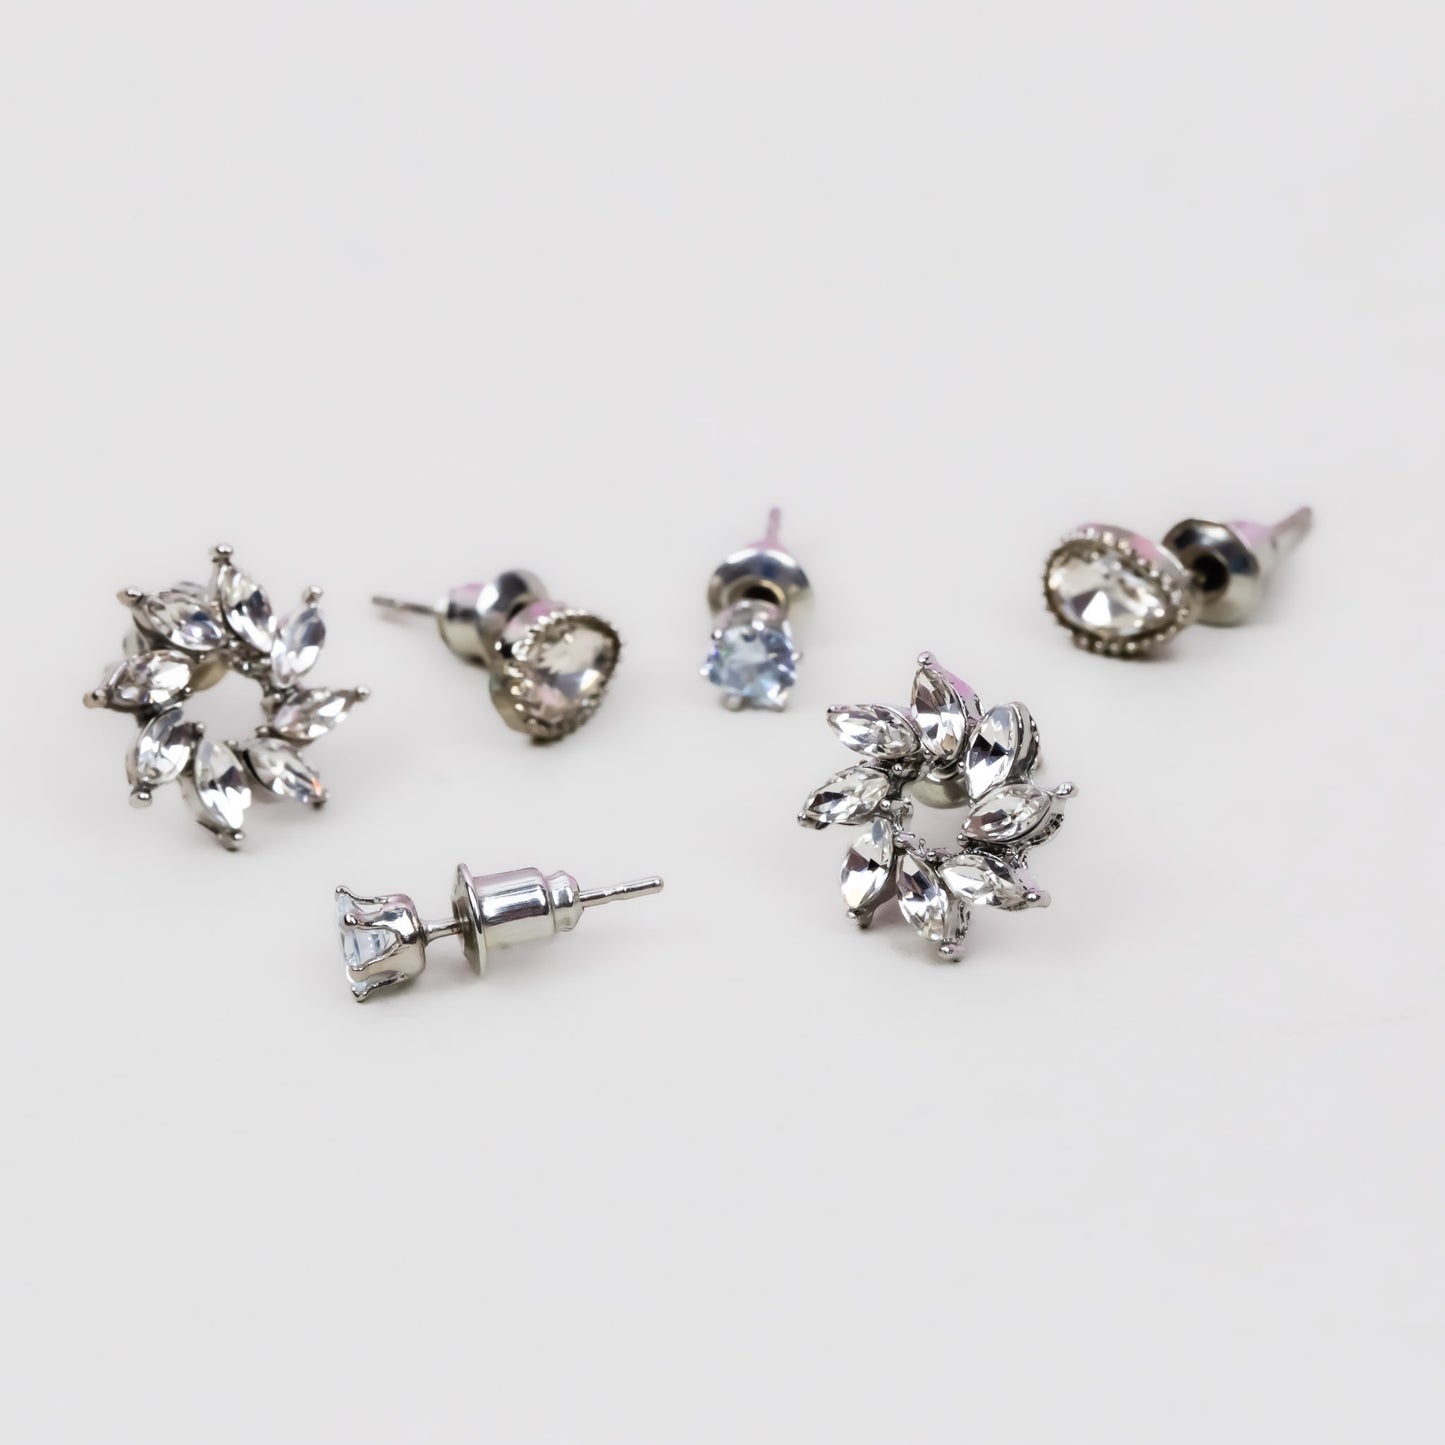 Set cercei mici argintii cu forme delicate, 3 perechi